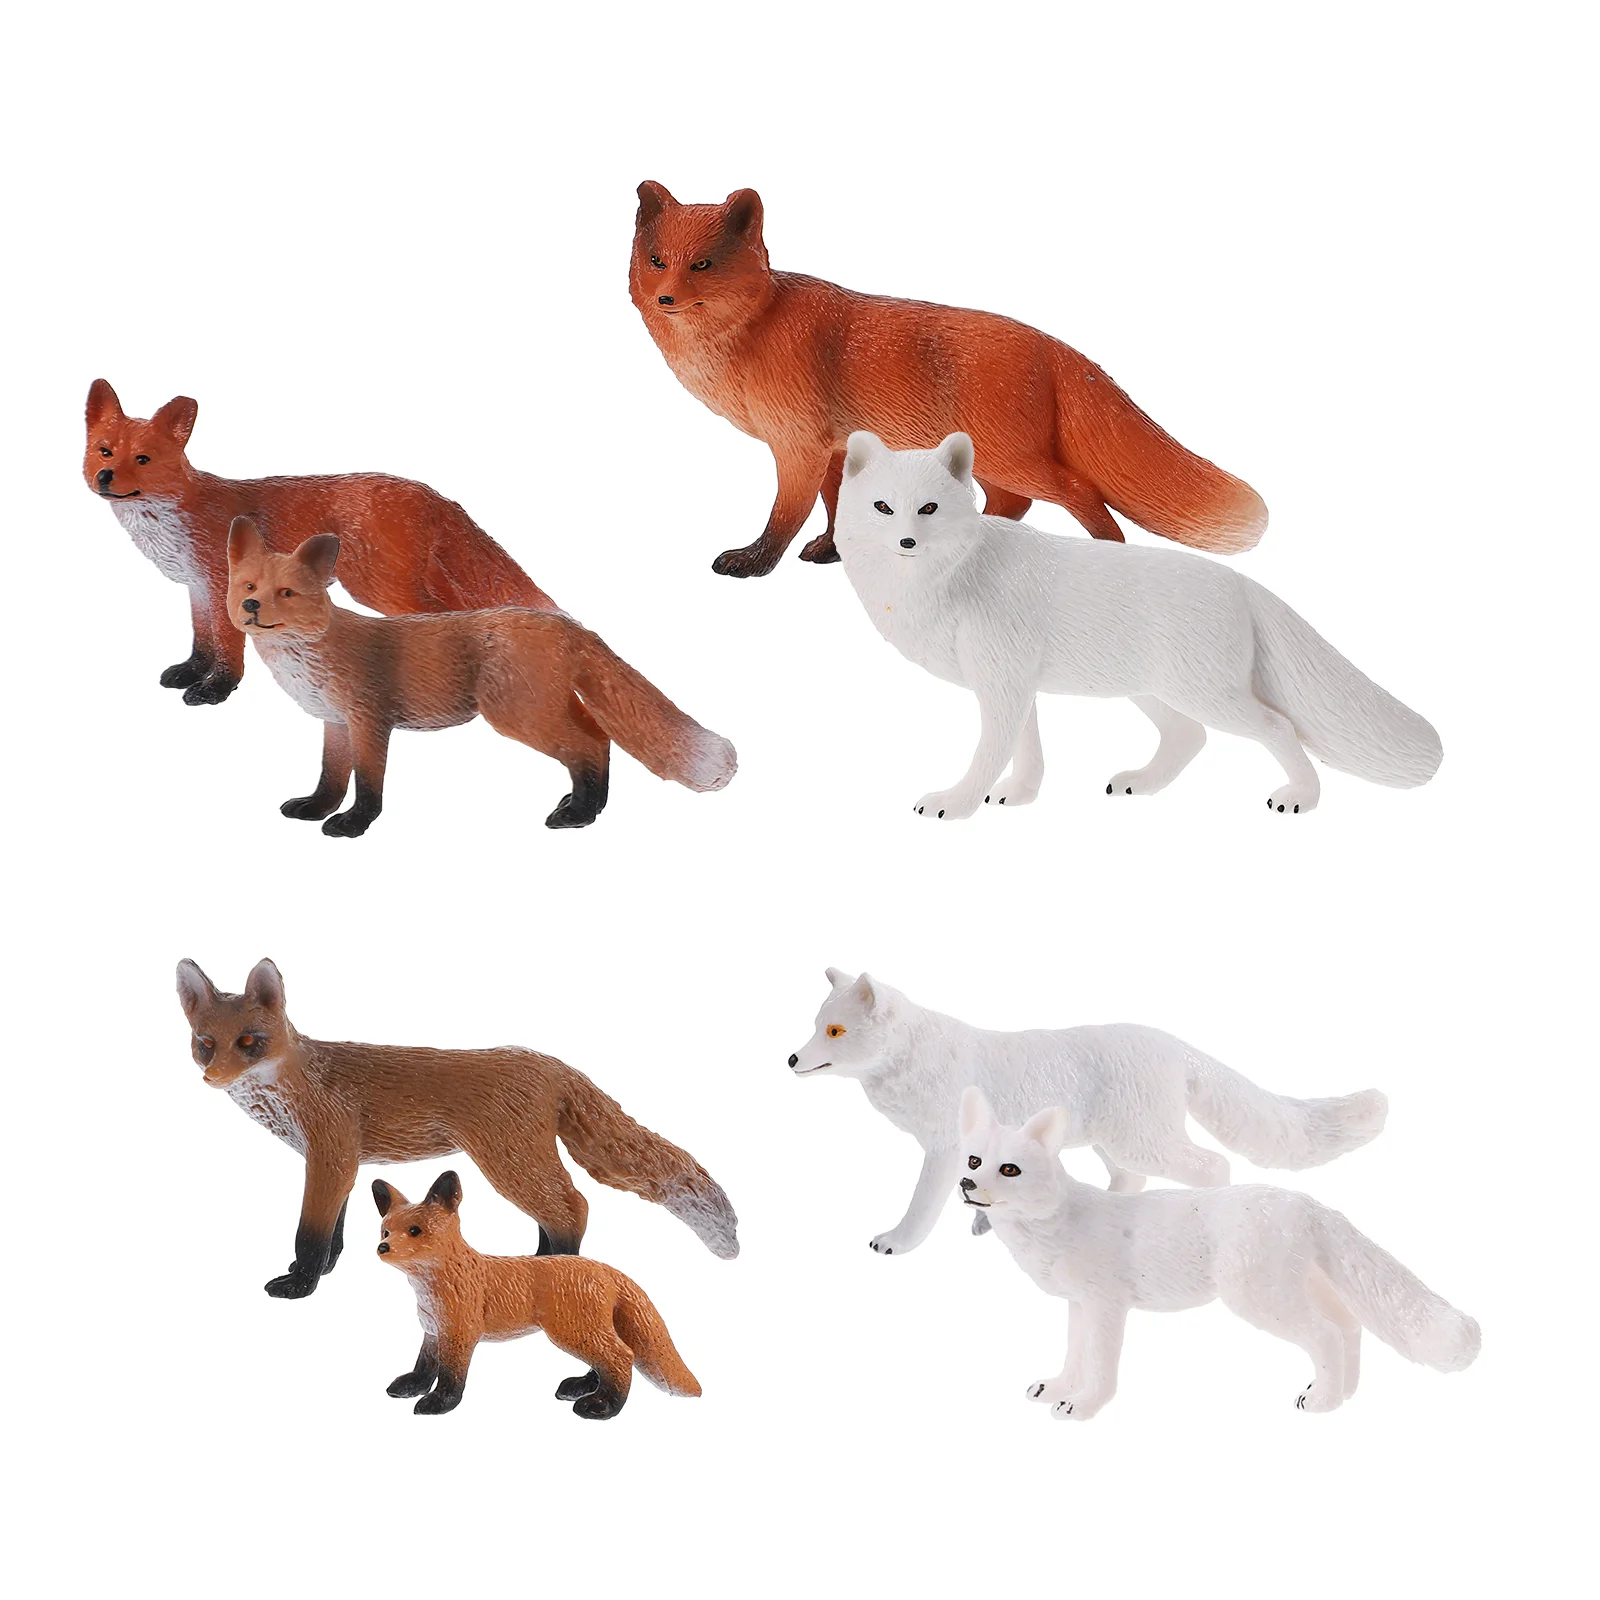 

Fox Animal Toy Animals Forest Foxes Figurines Figure Figures Mini Miniature Toys Decor Cake Statues Figurine Set Wild Playset